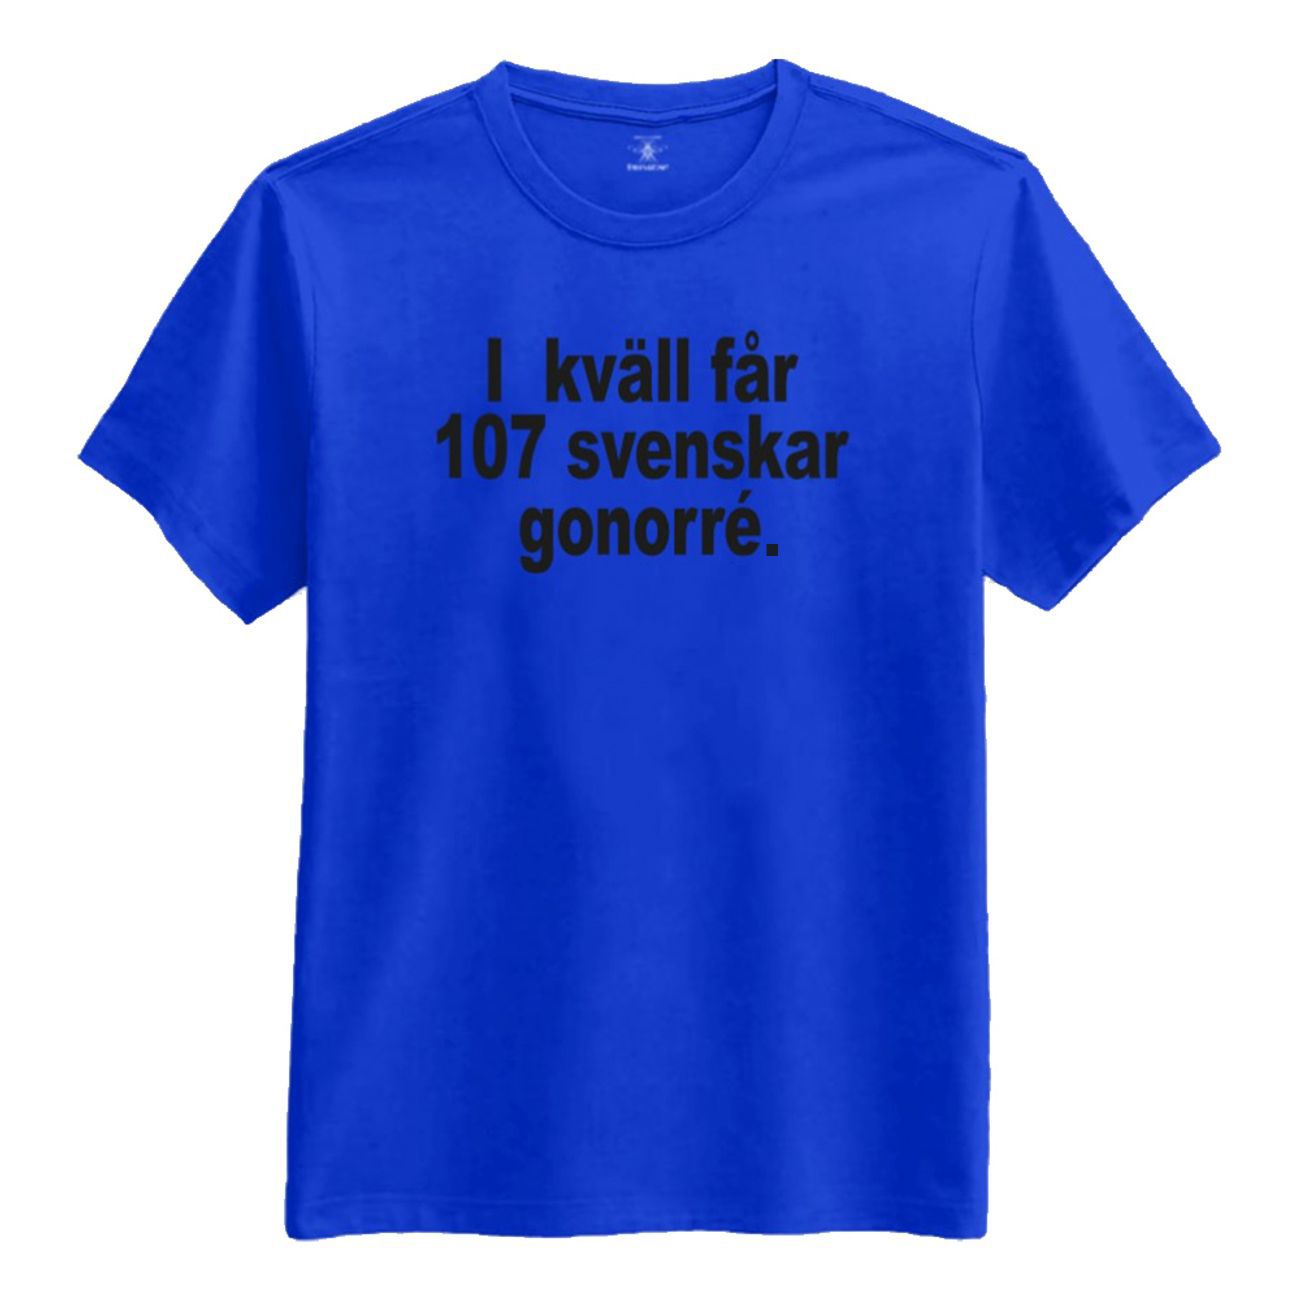 ikvall-far-107-svenskar-gonorre-t-shirt-55207-5